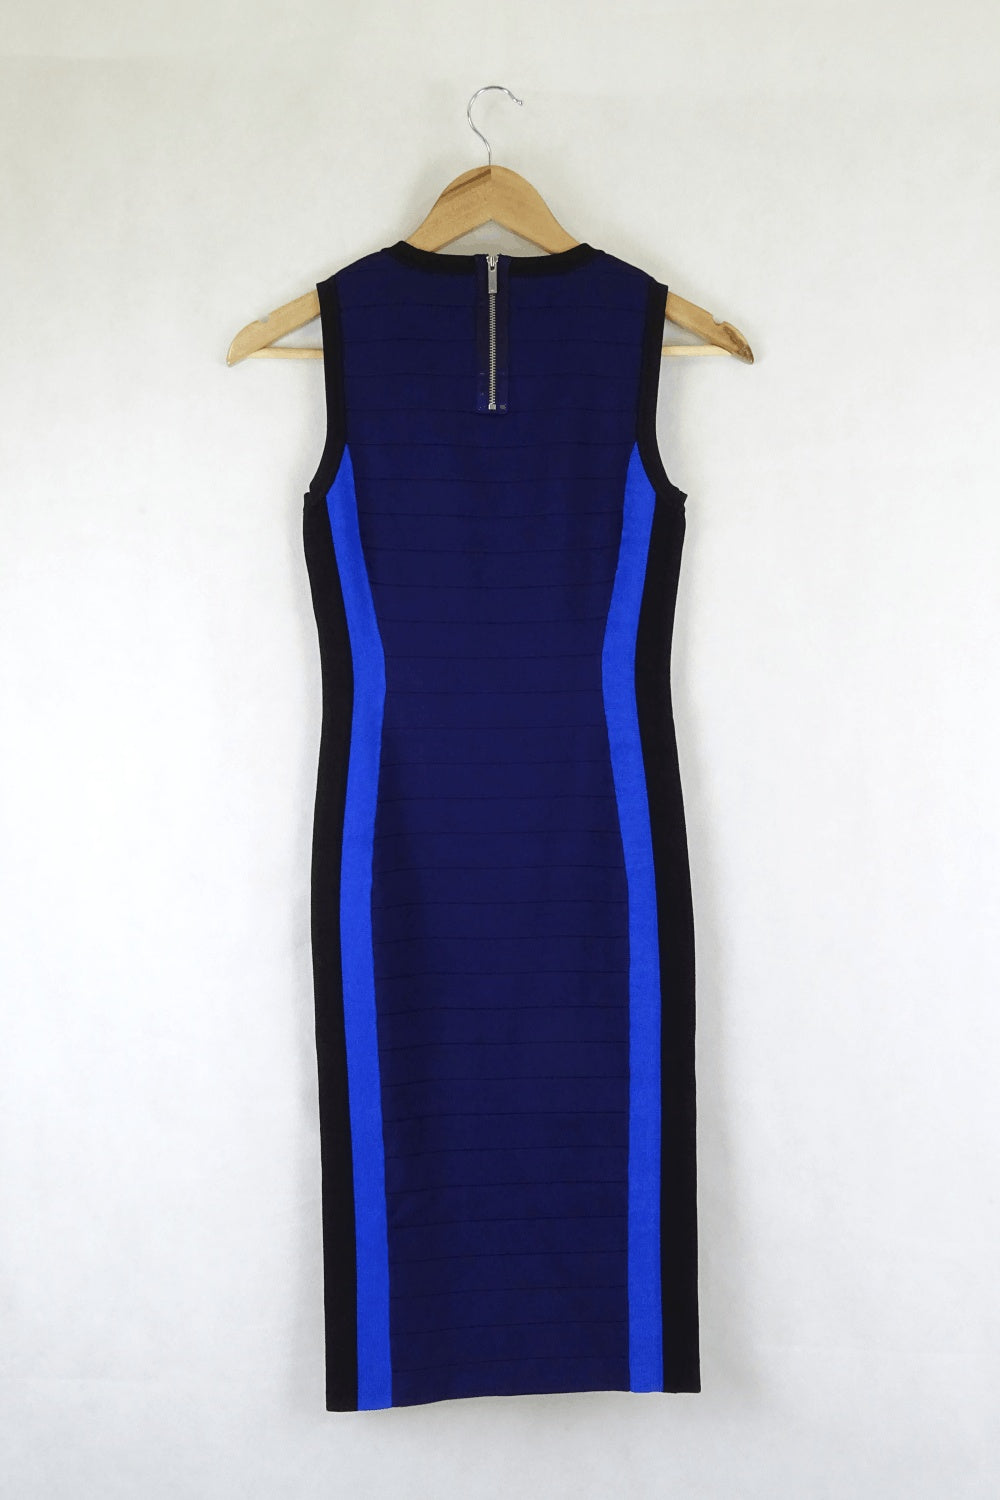 Karen Millen Bodycon Blue Dress XS